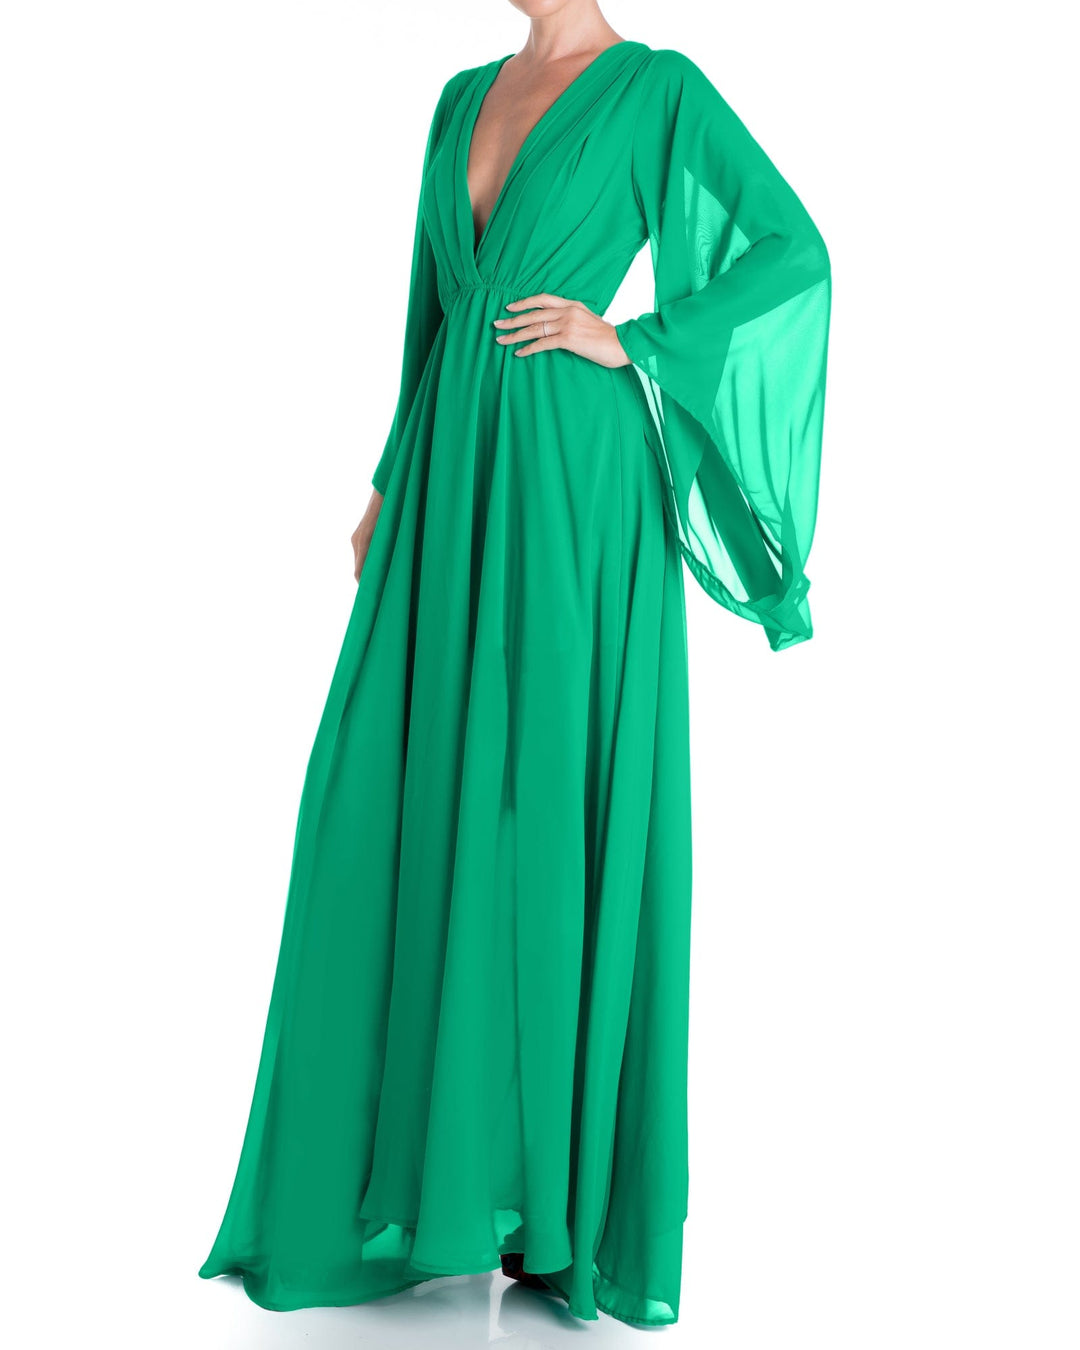 Sunset Maxi Dress - Emerald by Meghan Fabulous